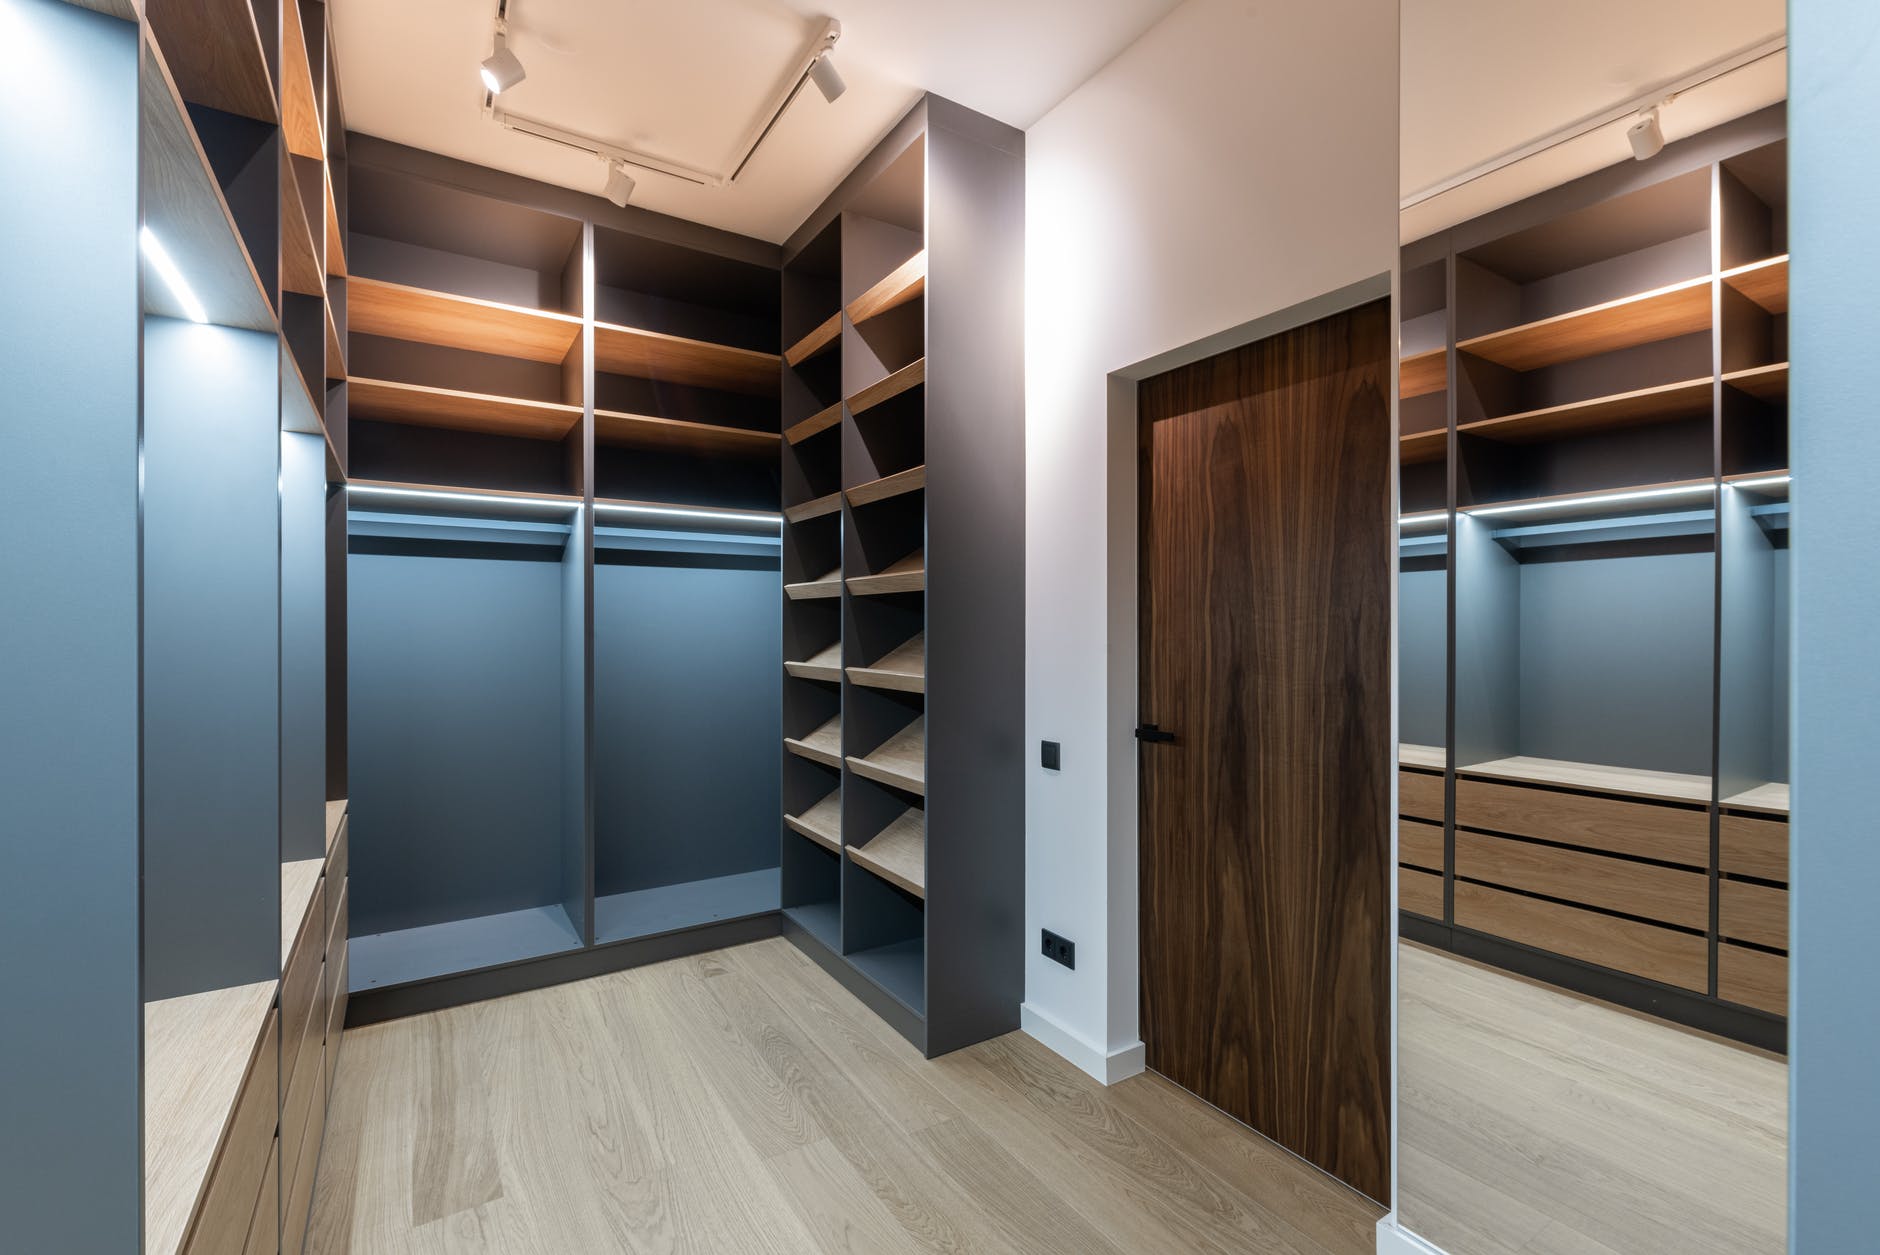 wardrobe interior with shelves near door